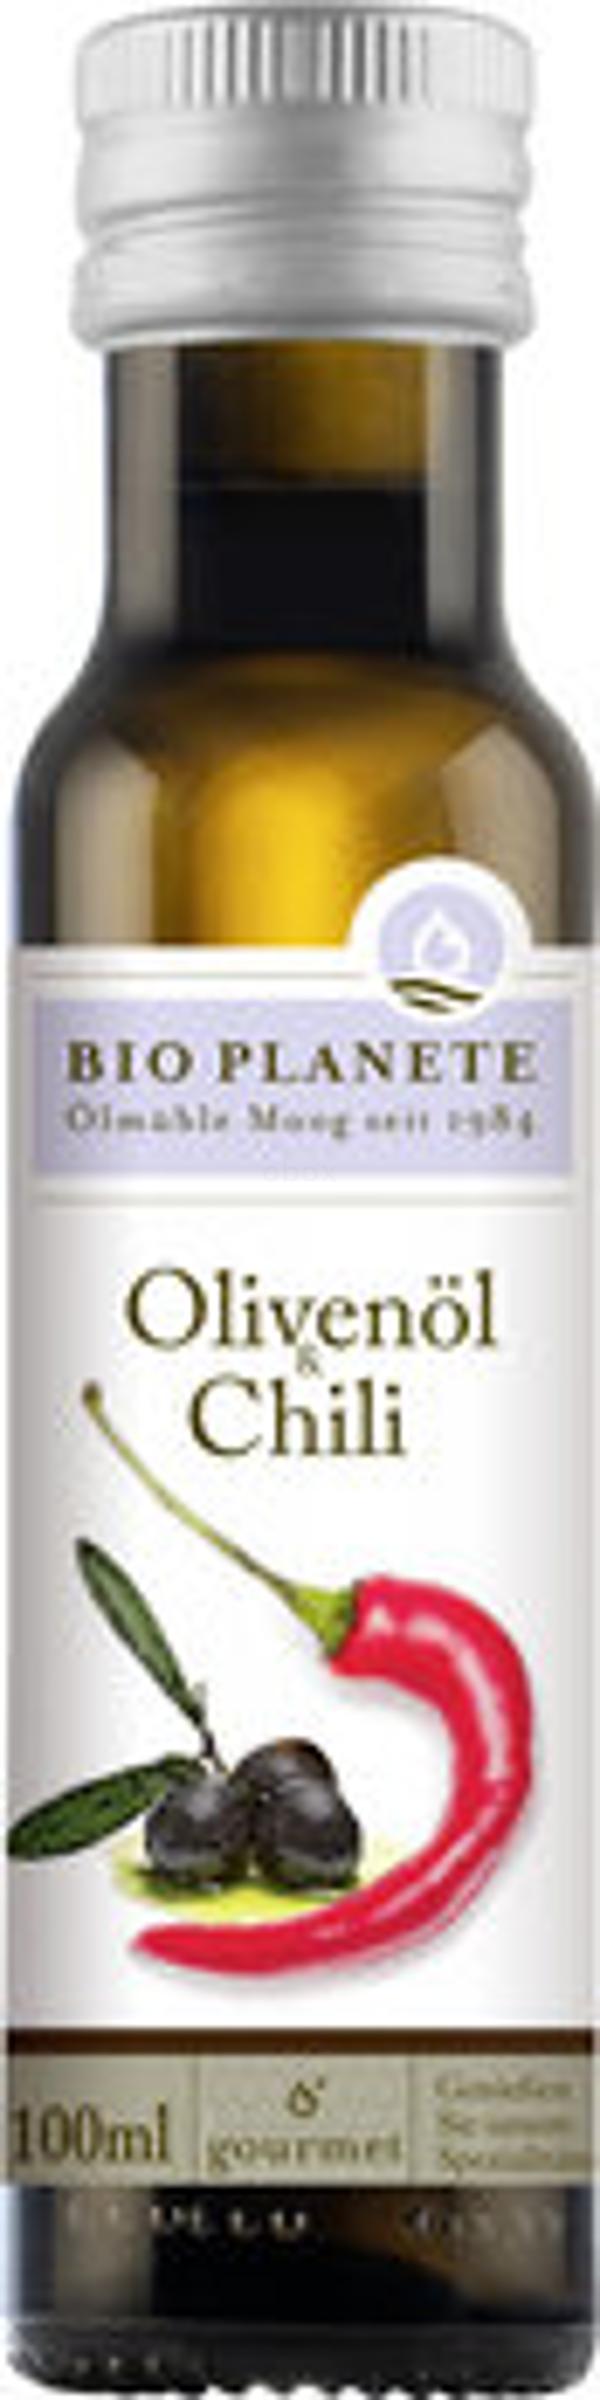 Produktfoto zu Olivenöl Chili 100ml